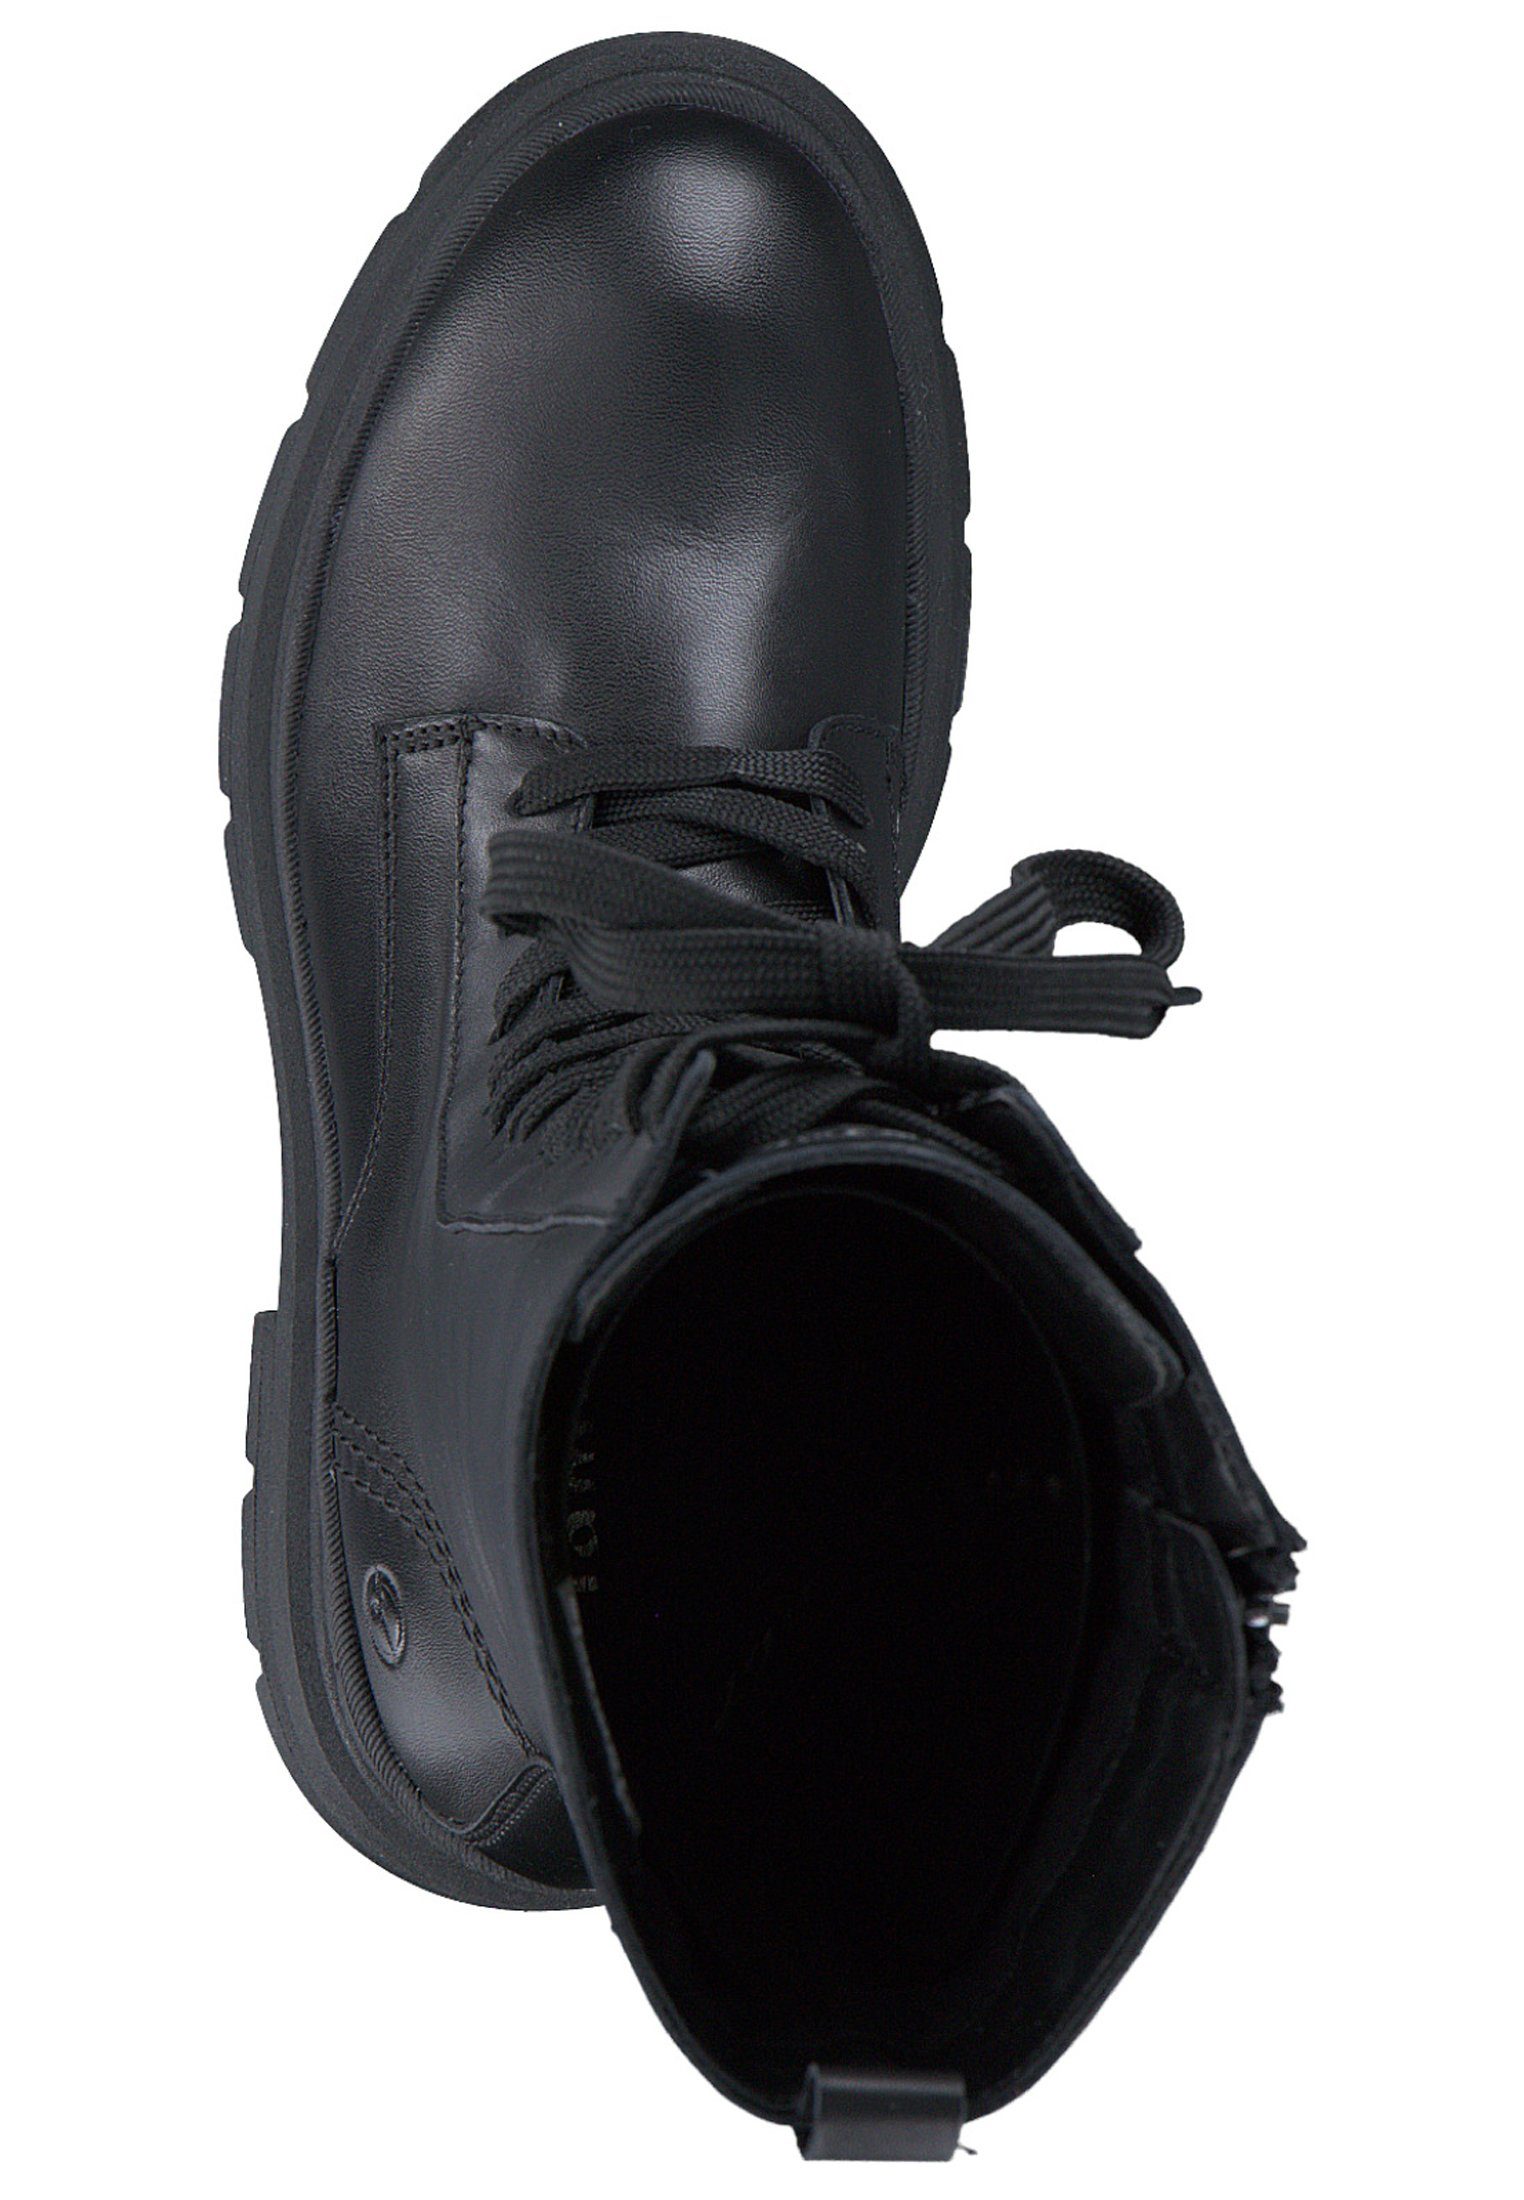 Tamaris 1-25212-29 Schwarz Black 003 Leather Stiefel (BLACK LEATHER)